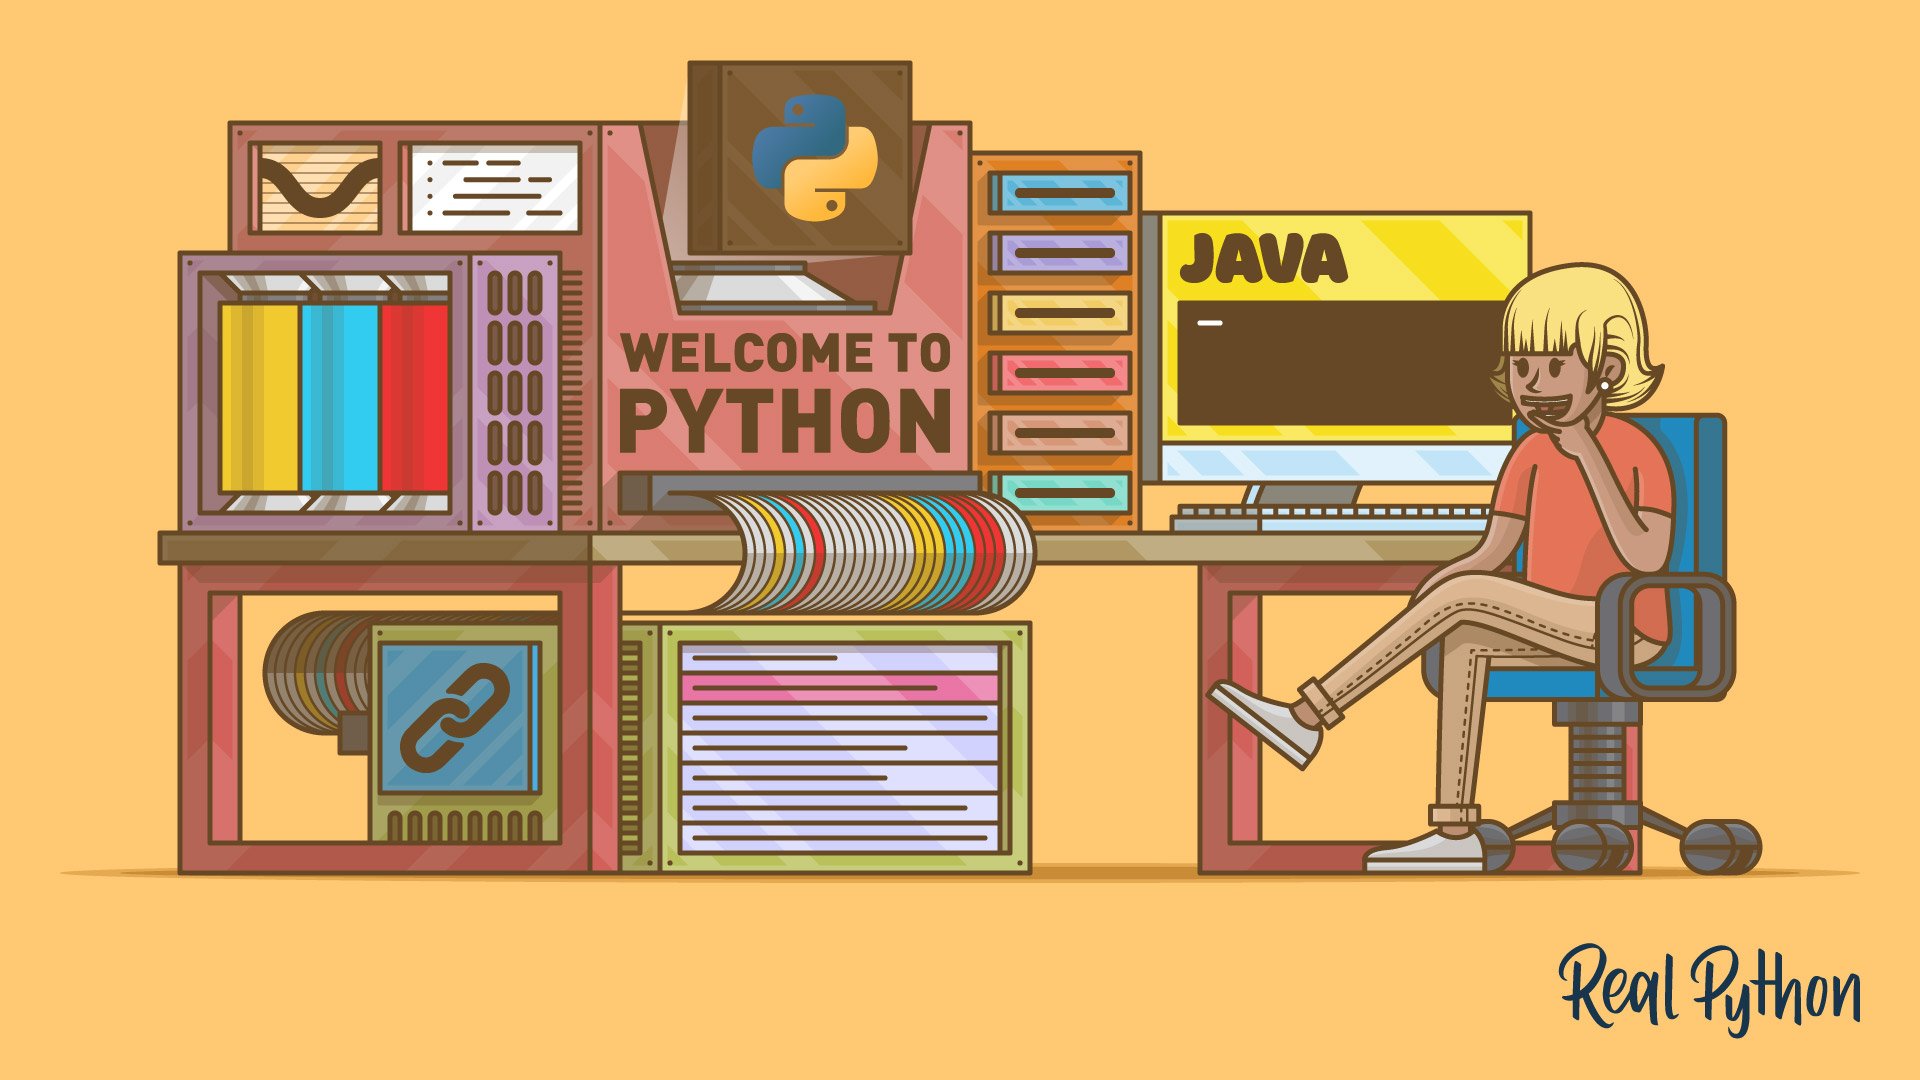 Java vs Python: What Should a Java Developer Know About Python?